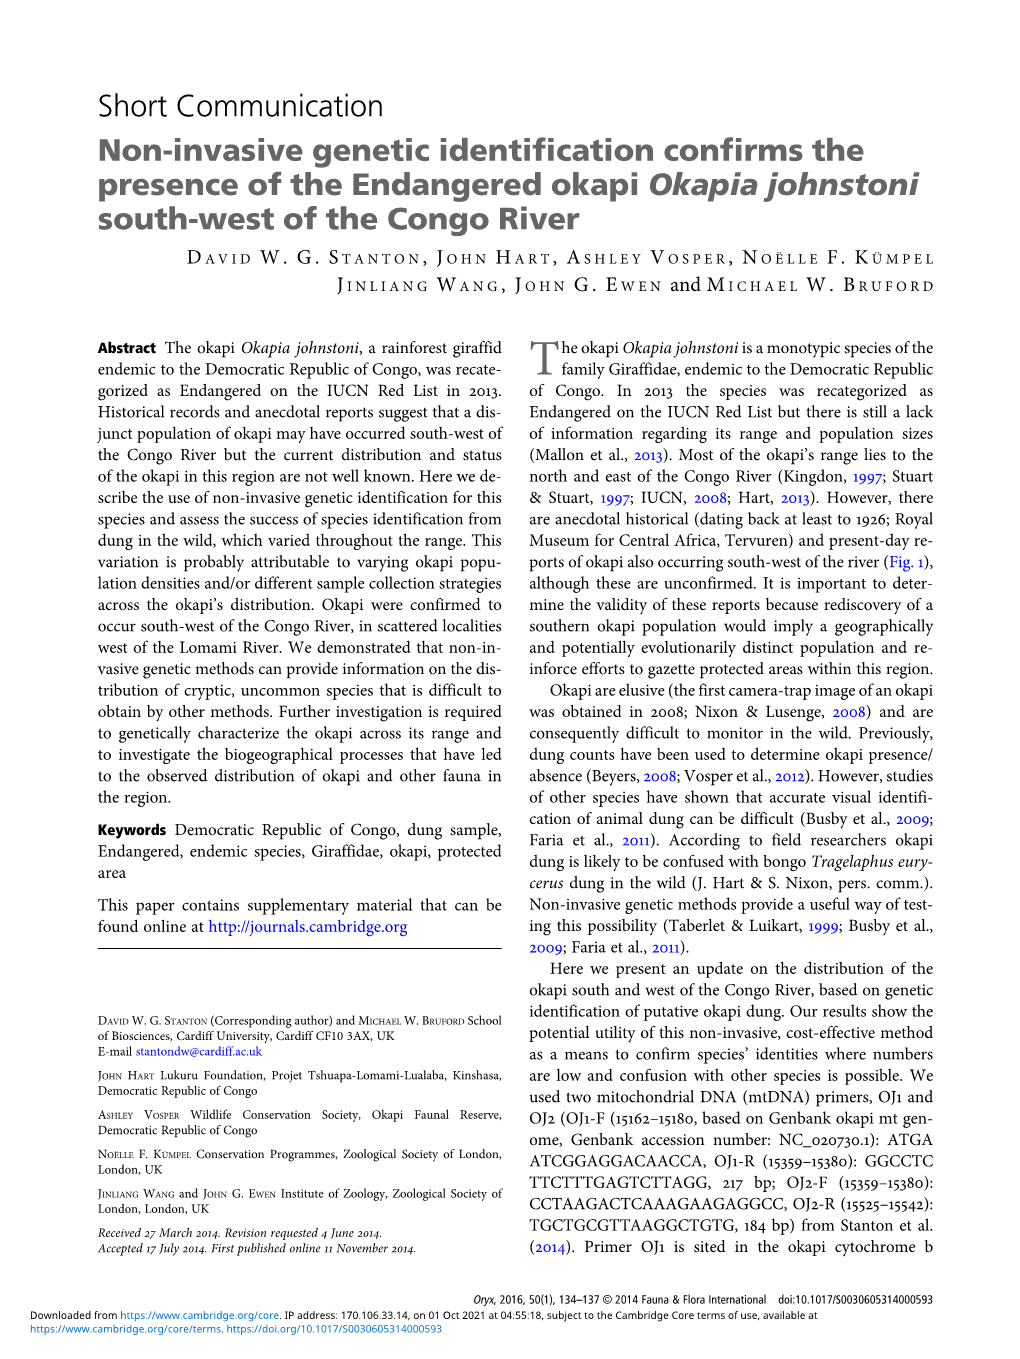 Short Communication Non-Invasive Genetic Identification Confirms the Presence of the Endangered Okapi Okapia Johnstoni South-West of the Congo River